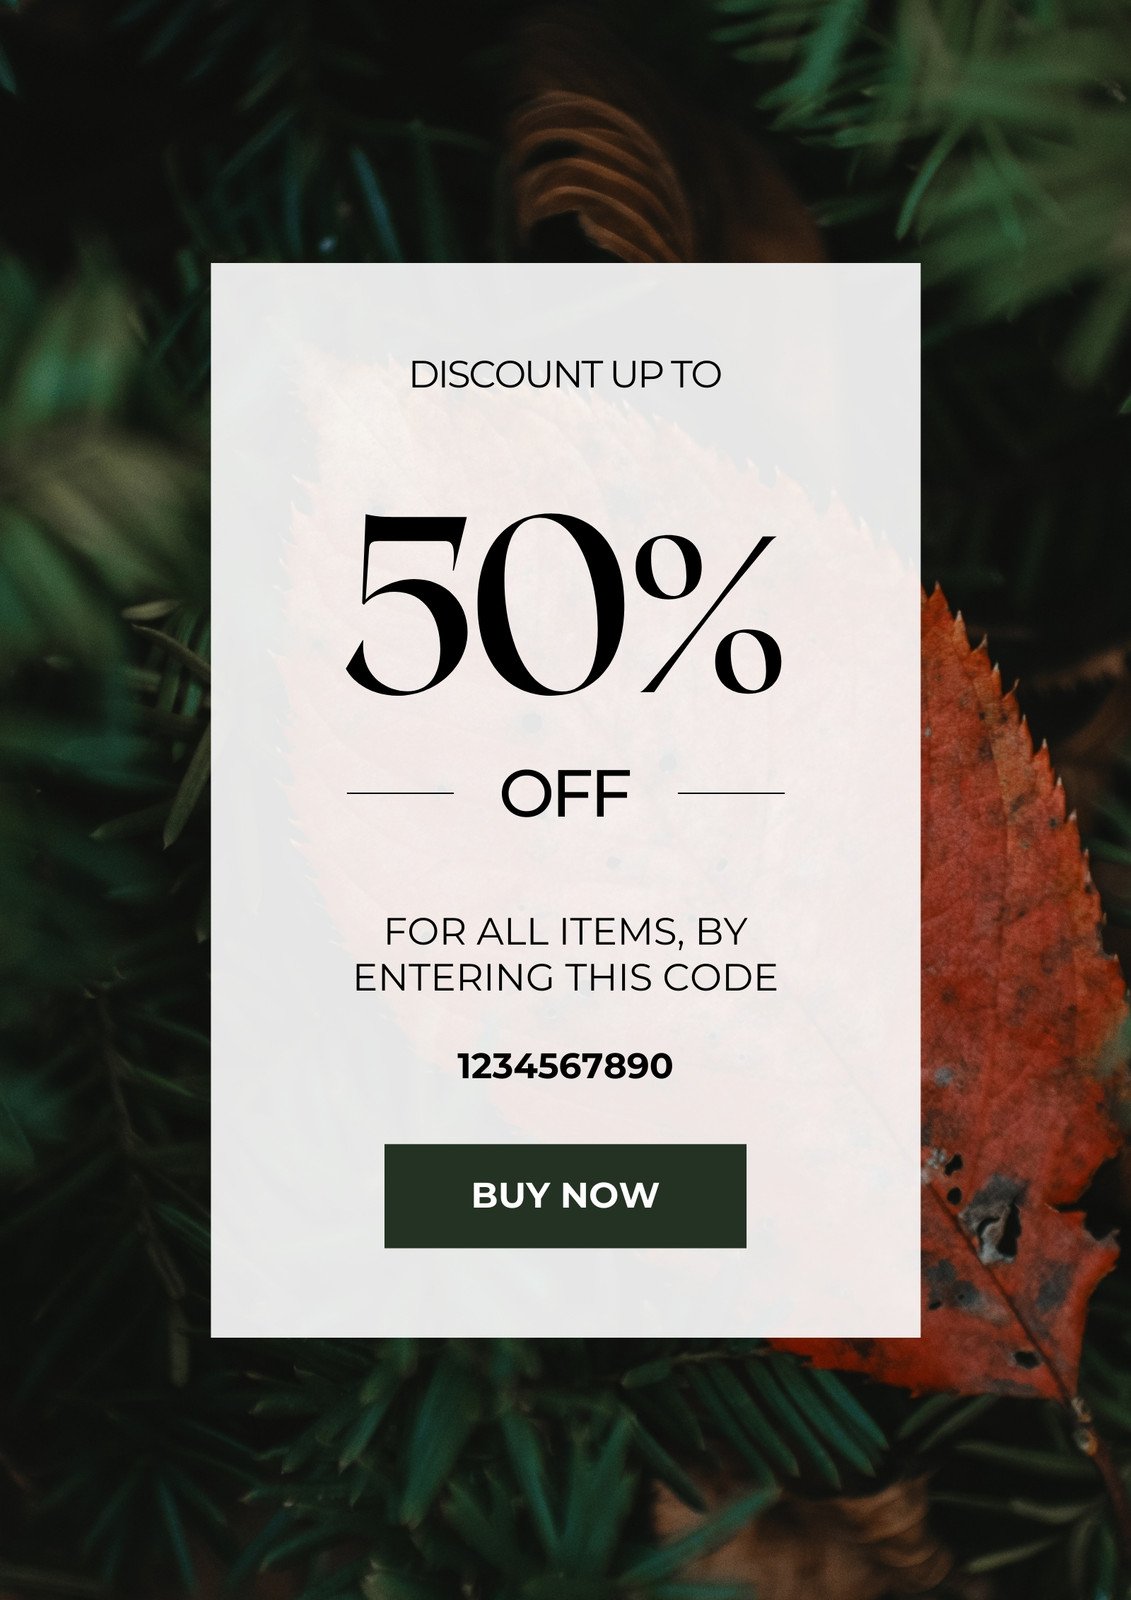 https://marketplace.canva.com/EAFA7rXq4JI/1/0/1131w/canva-green-minimalist-discount-coupon-zLDs5Gq4QpE.jpg